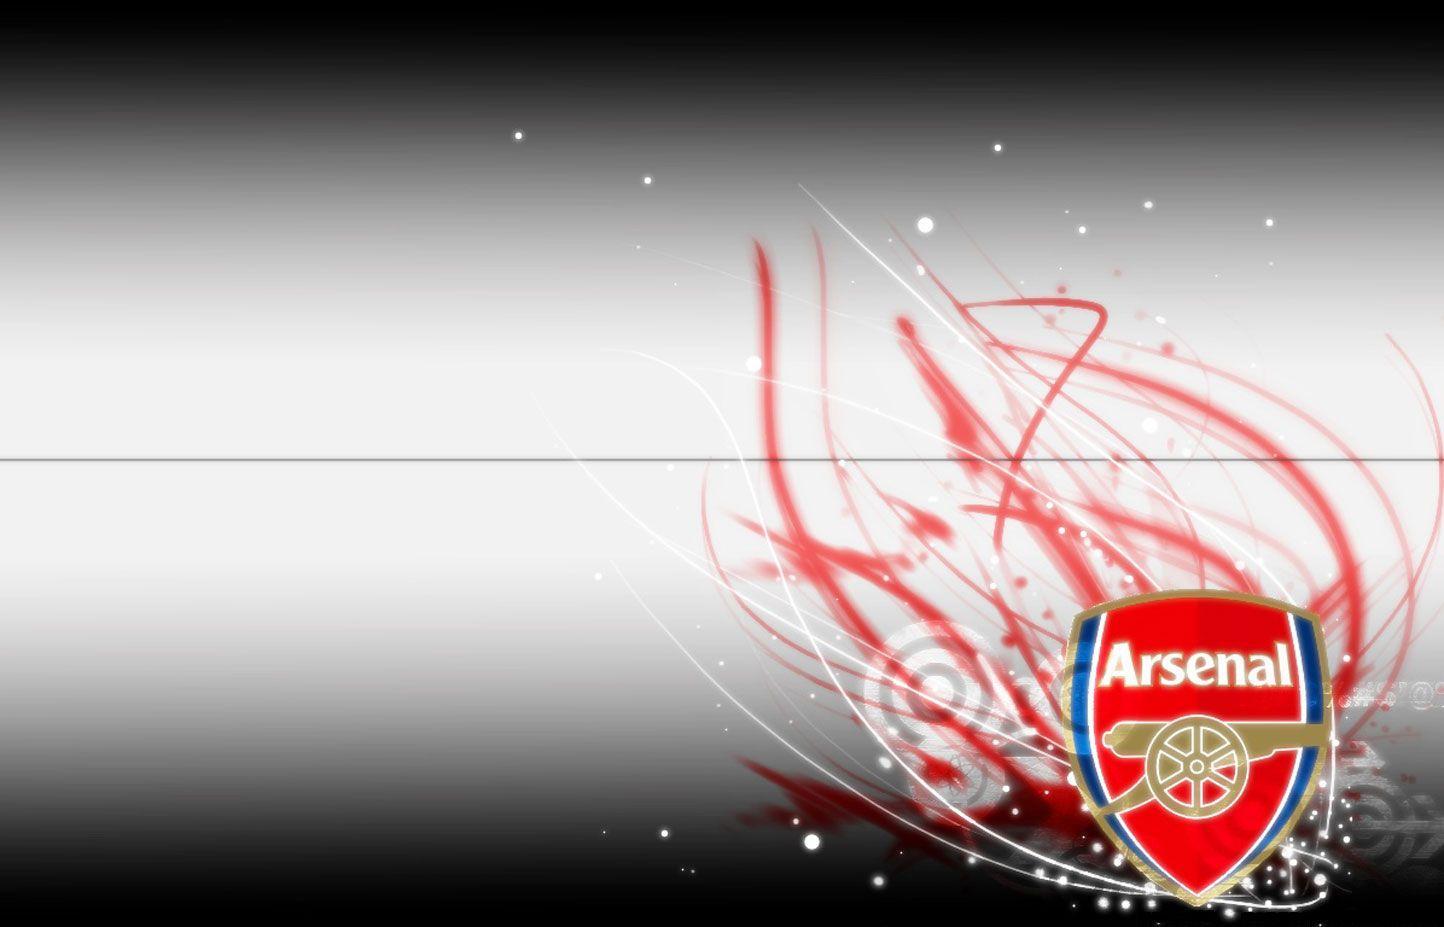 Arsenal FC Logo 2013 HD Wallpaper for Desktop